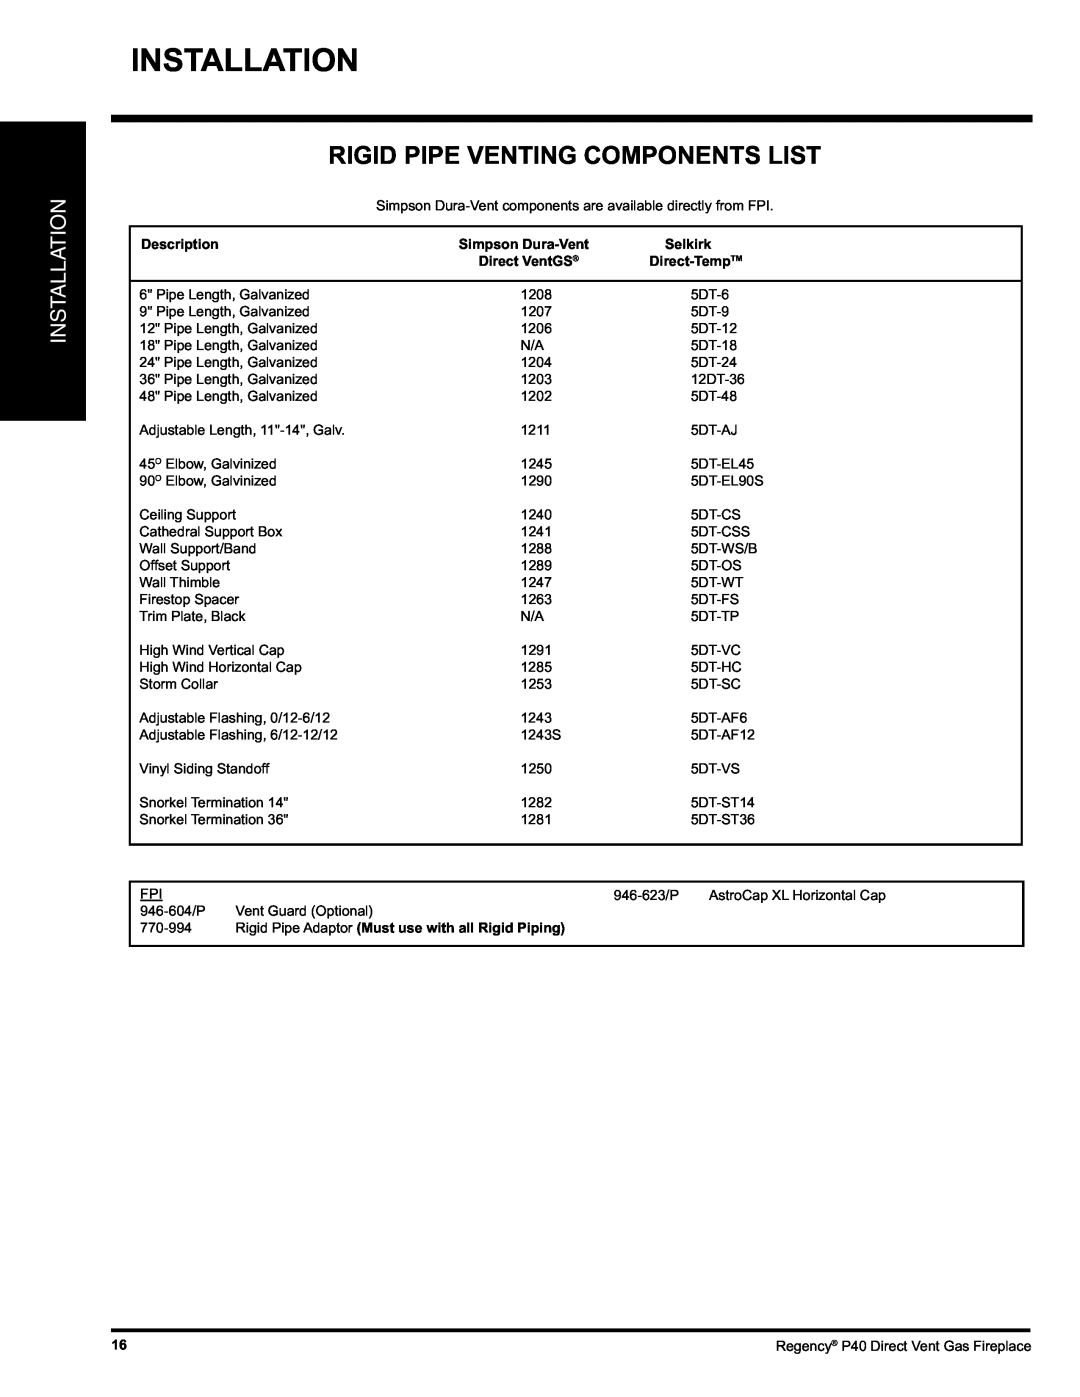 Regency P40-LP Rigid Pipe Venting Components List, Installation, Description, Simpson Dura-Vent, Selkirk, Direct VentGS 